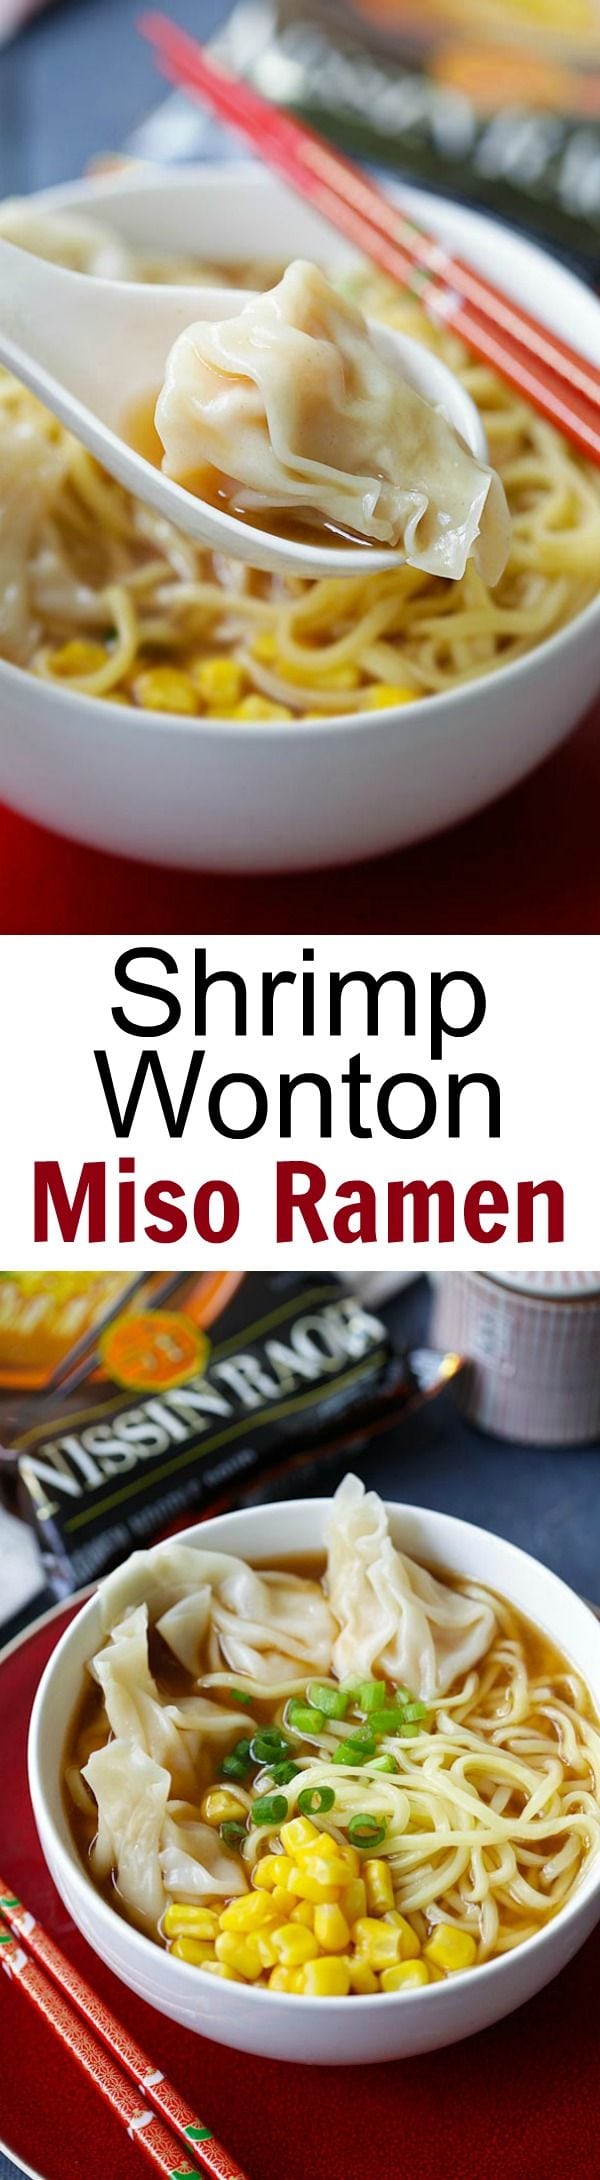 Shrimp Wonton Miso Ramen - restaurant-quality miso ramen with juicy and plump shrimp wontons, made with Nissin RAOH ramen, SO GOOD! | rasamalaysia.com